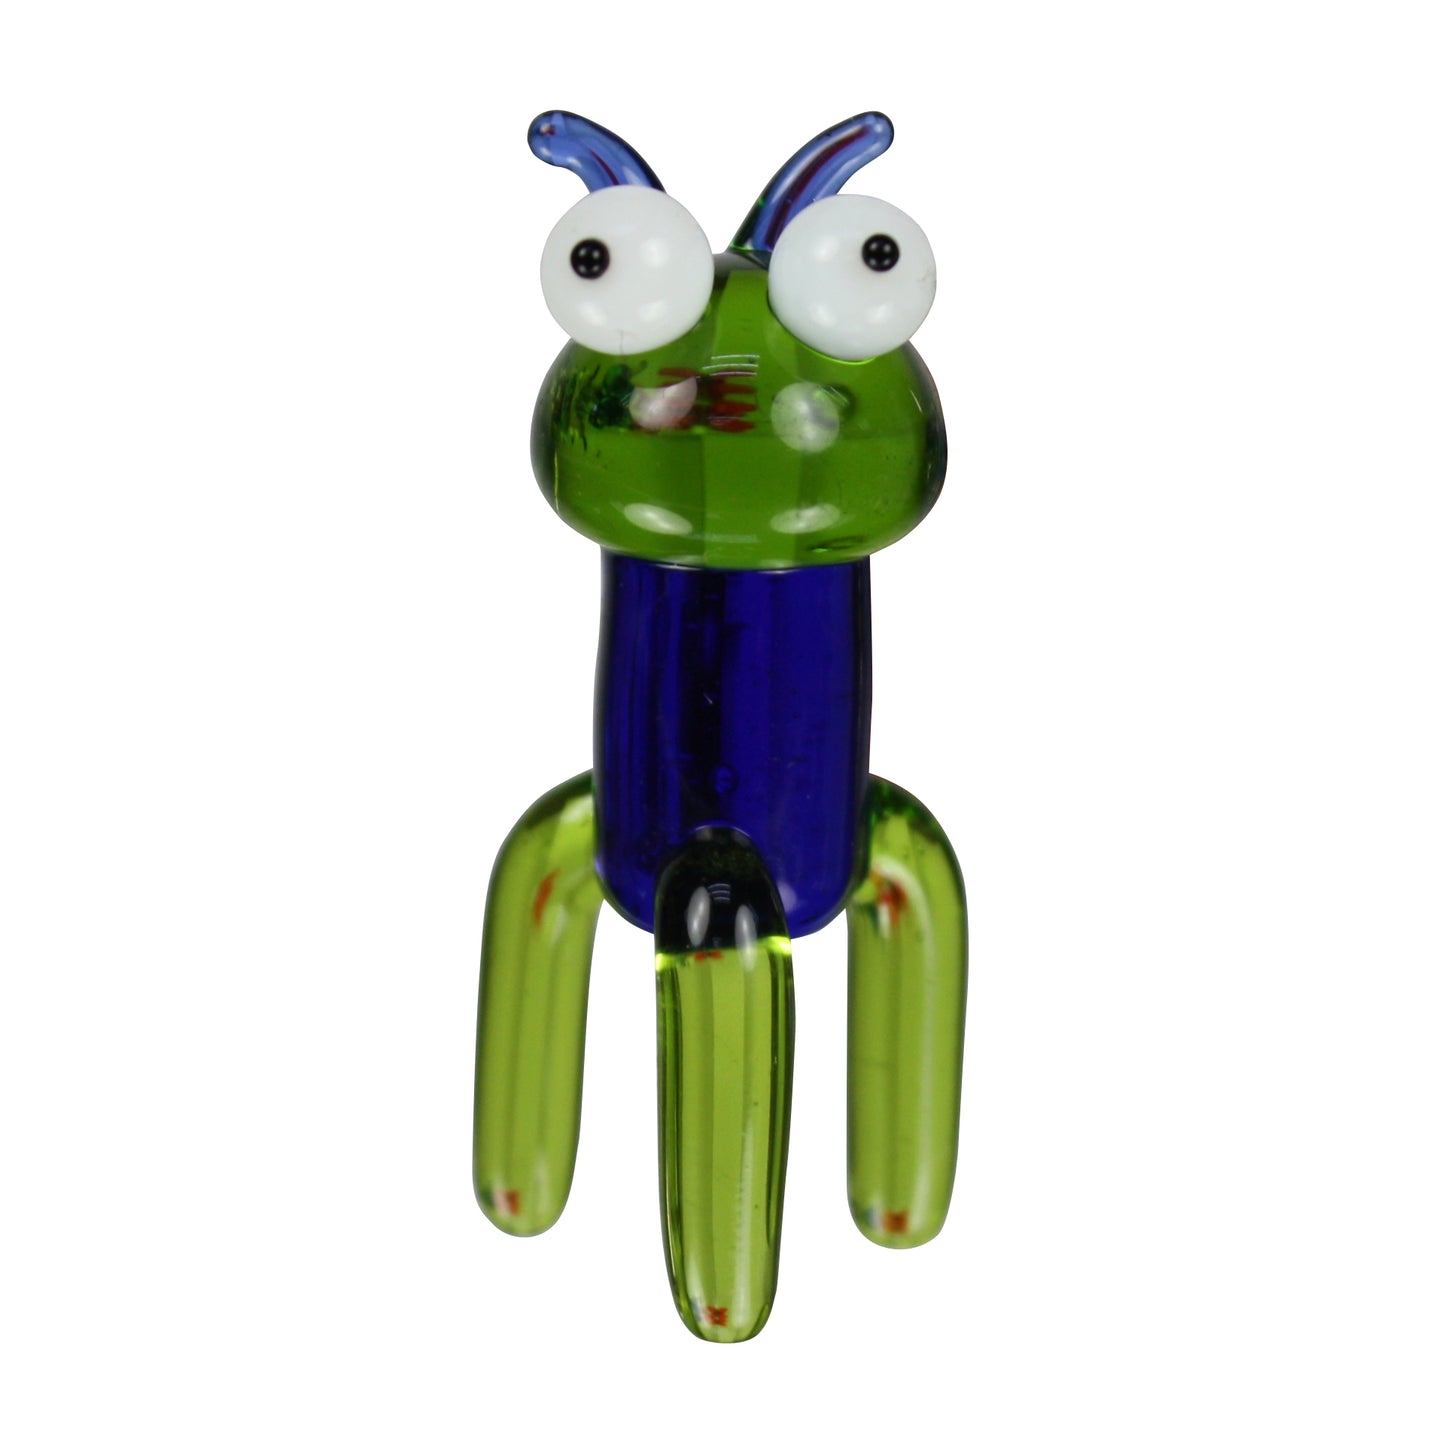 GlassWorld tOObz™ bazOO™ collectible miniature glass figurine Product Image